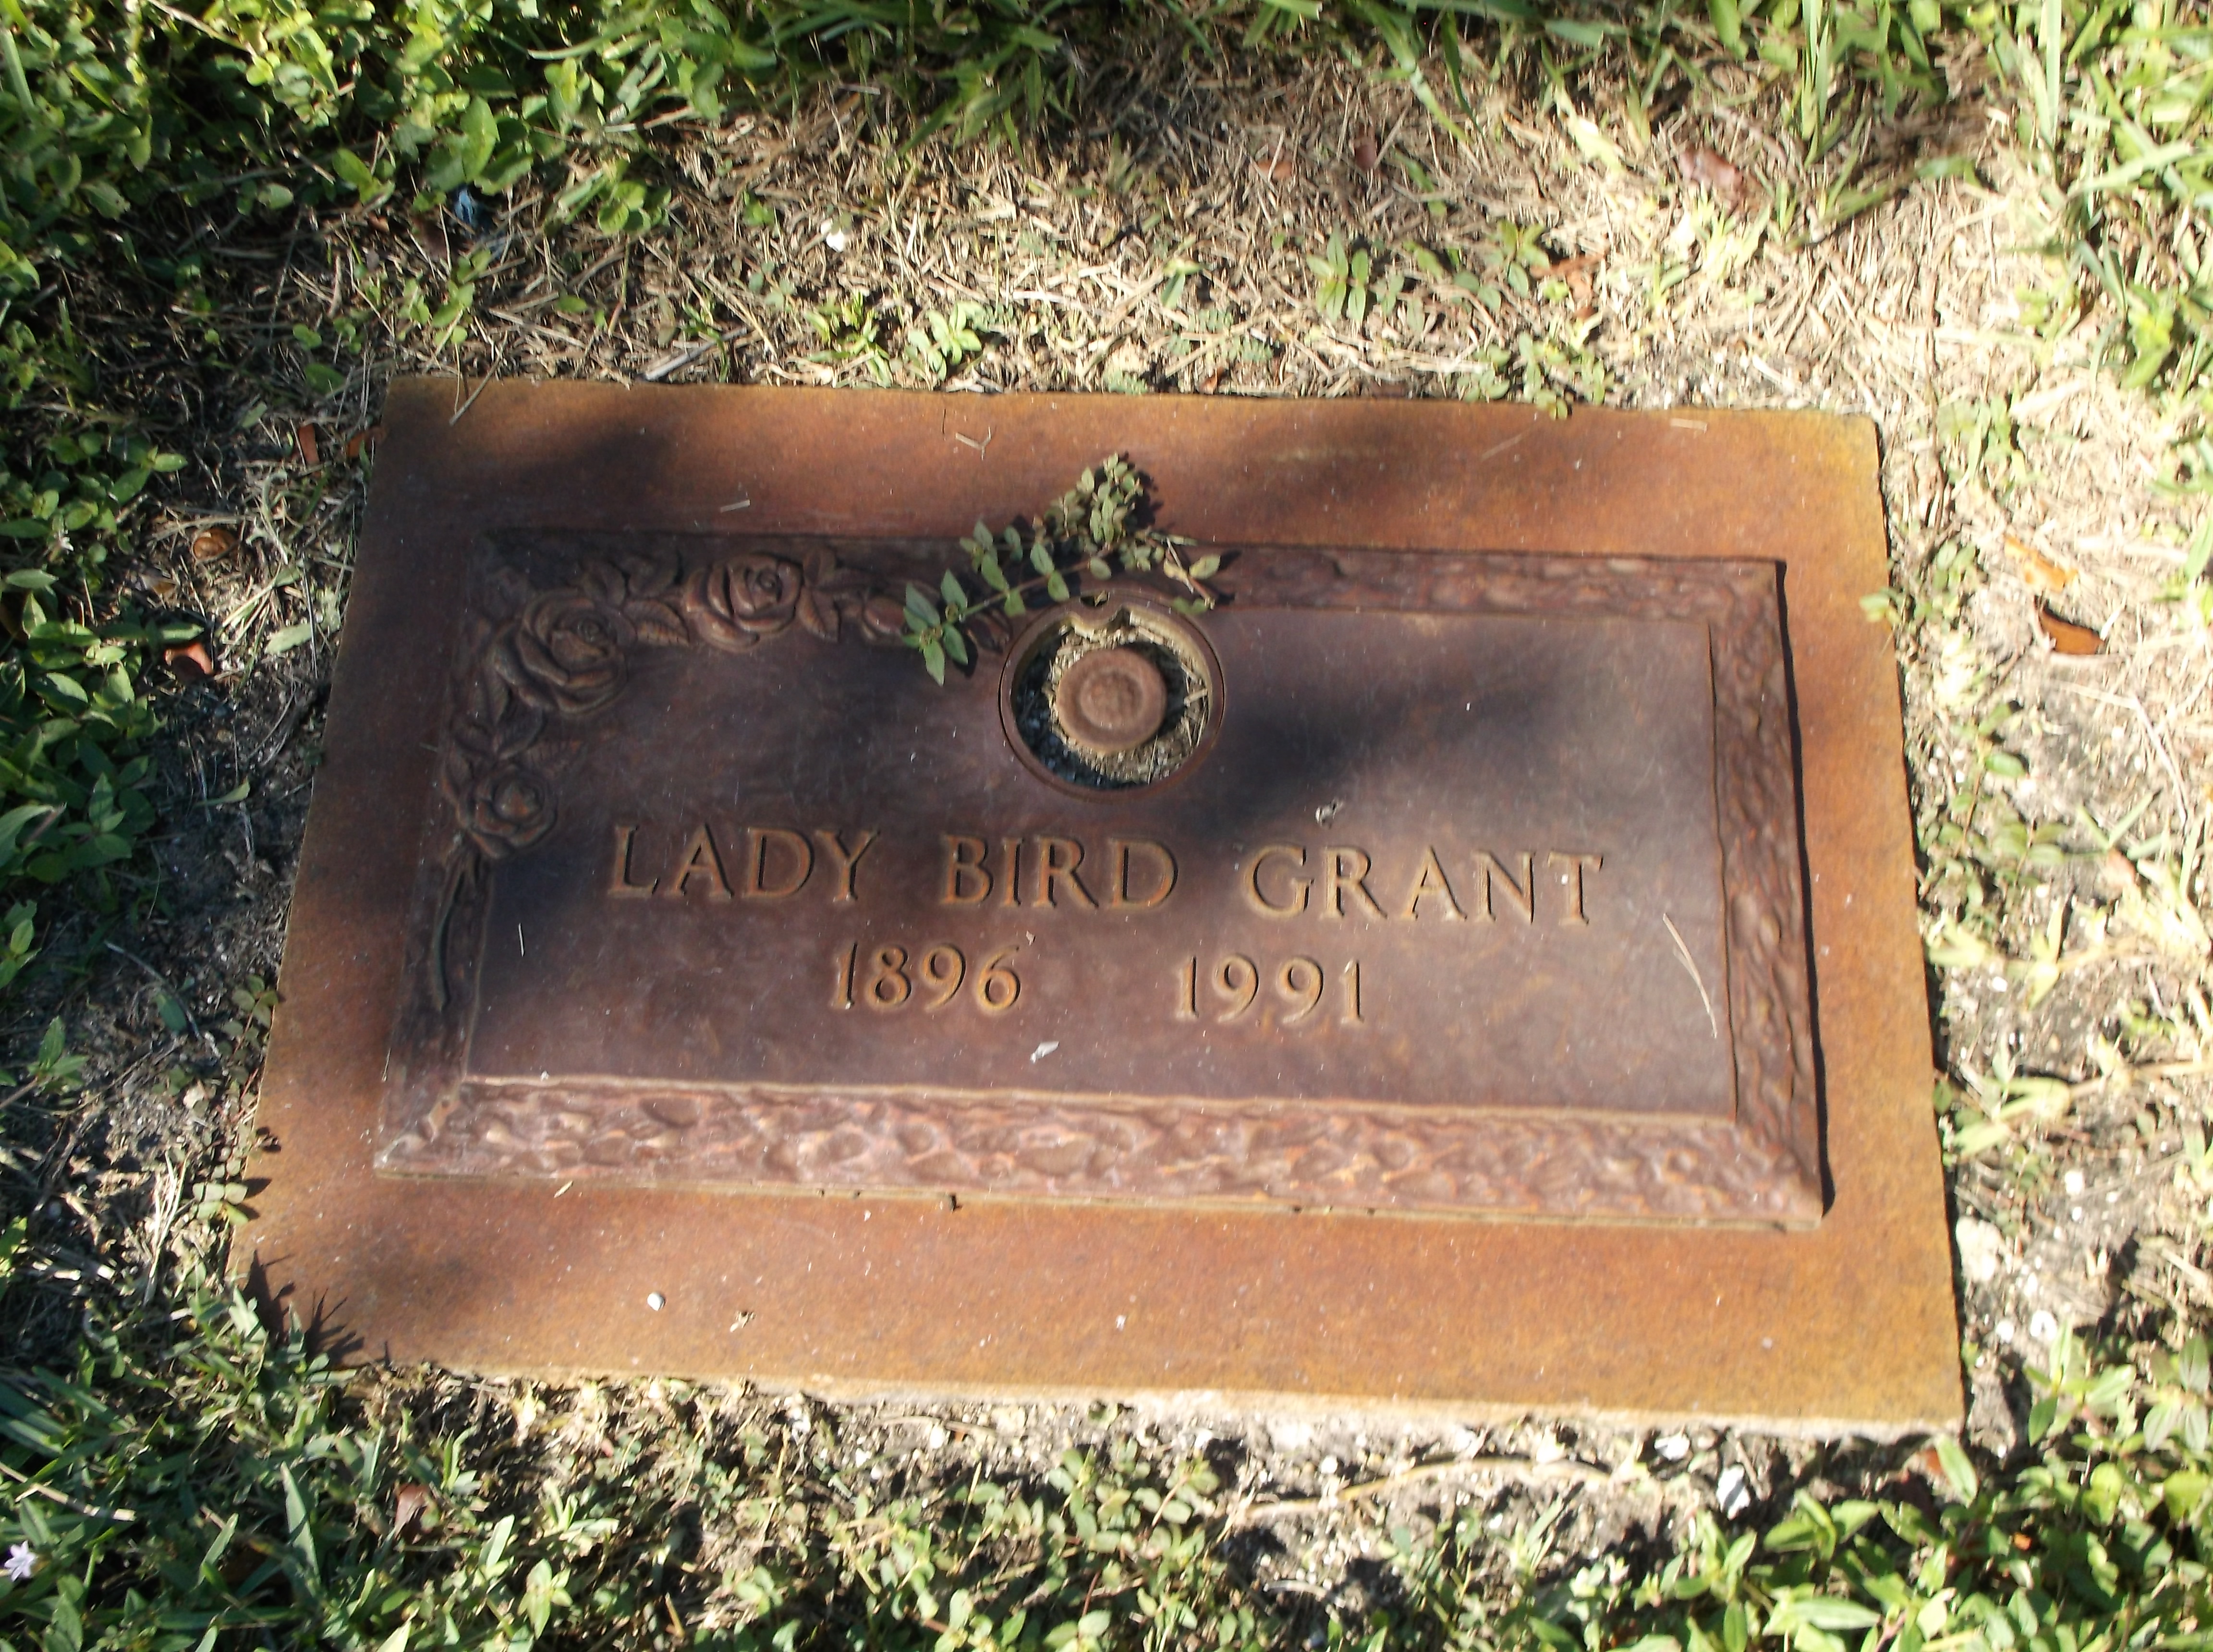 Lady Bird Grant